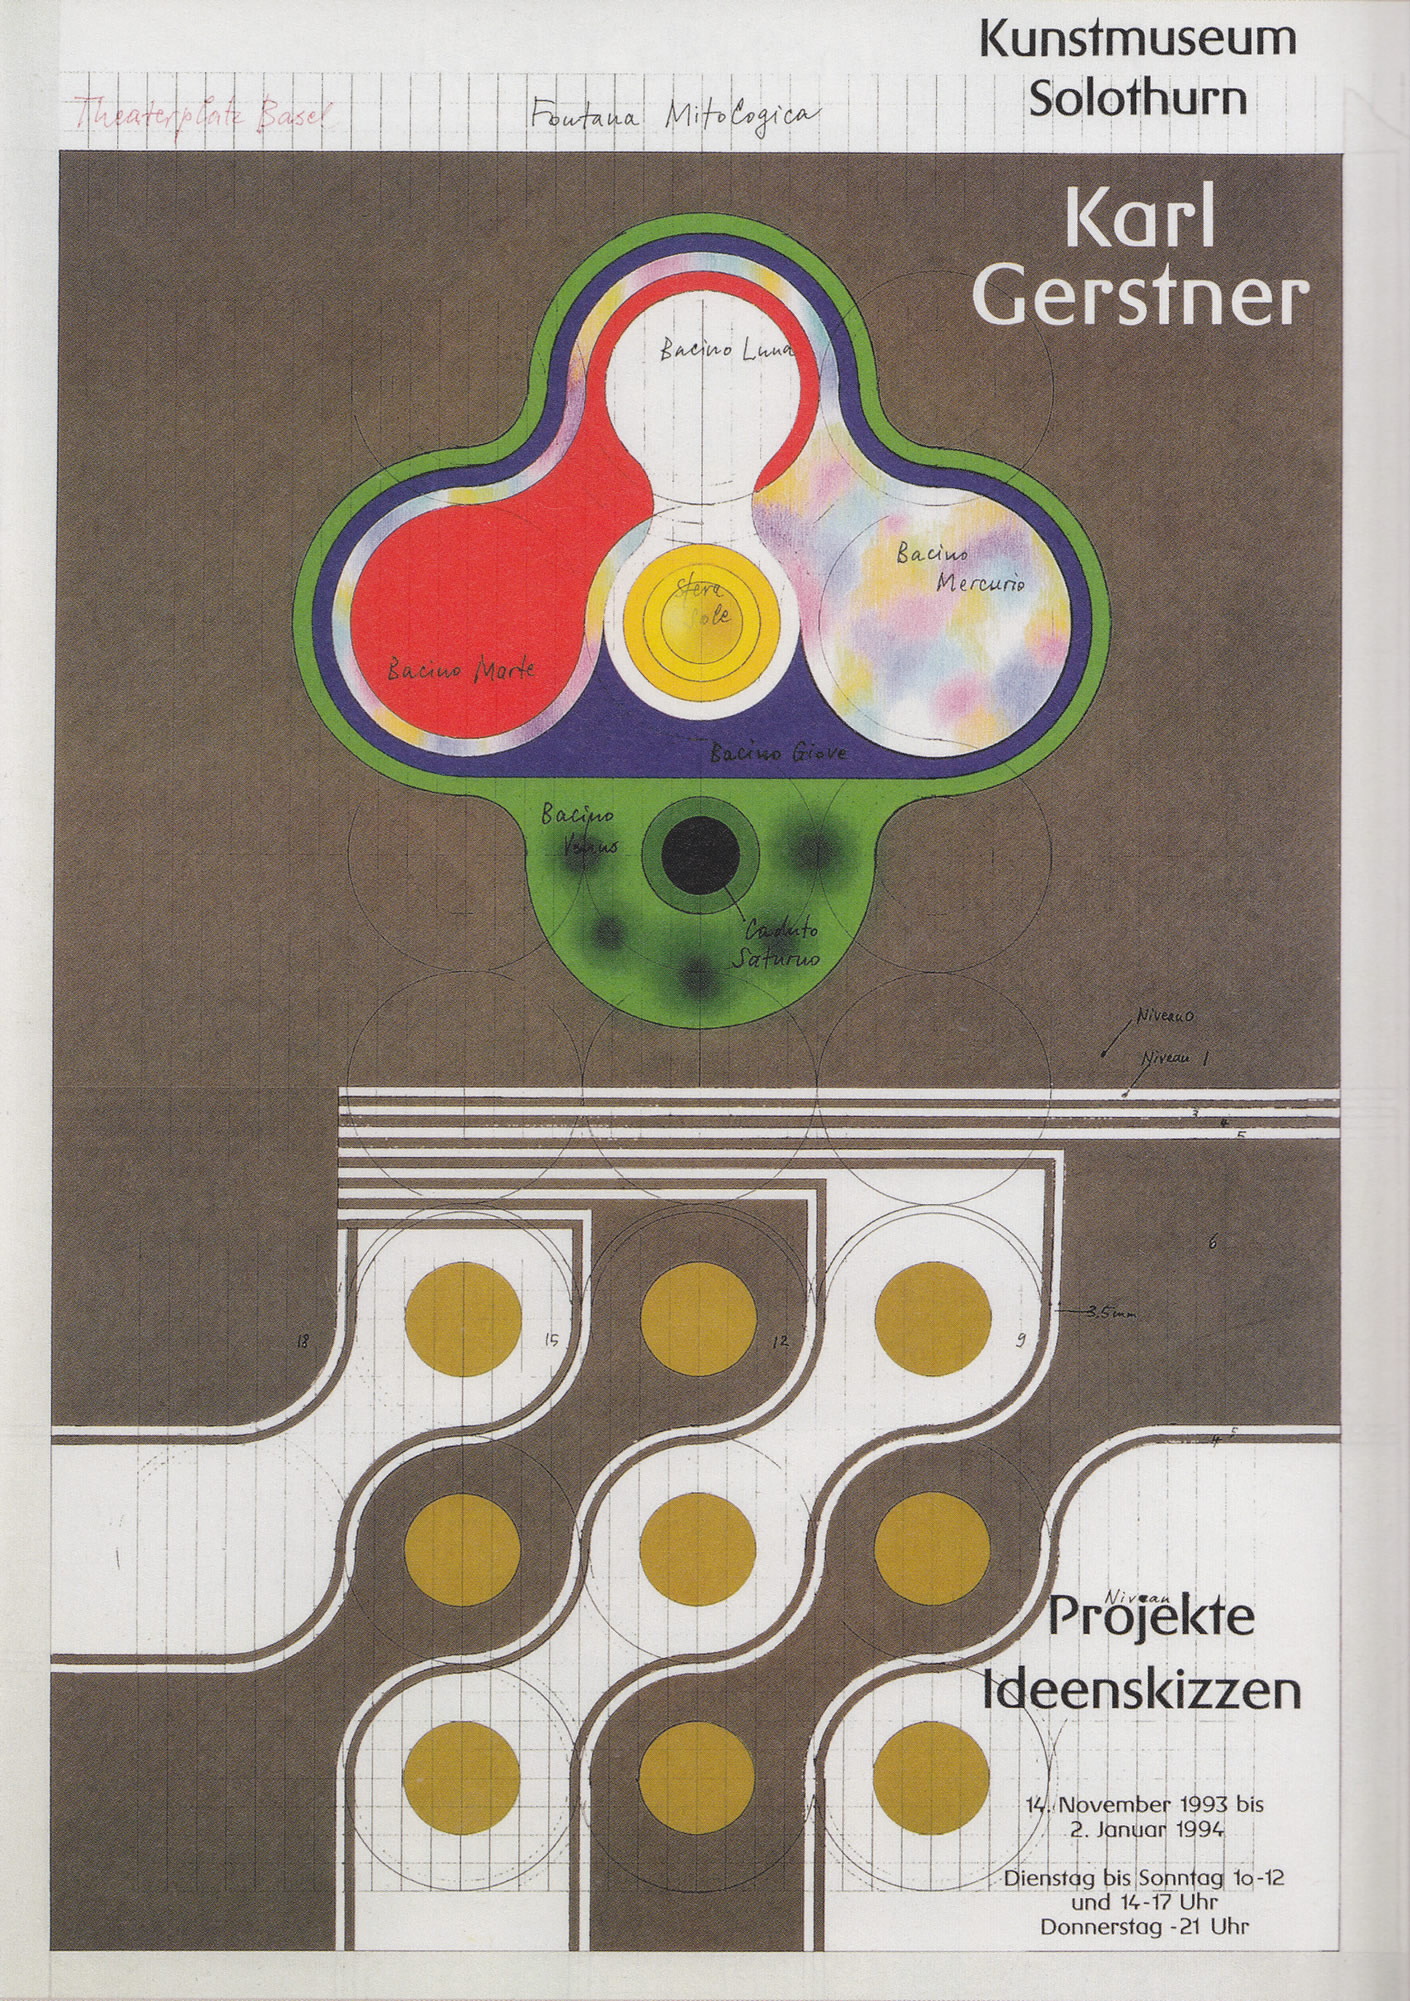 Projekte Ideenskizzen. Kunstmuseum Solothurn. Poster. Designer: Karl Gerstner